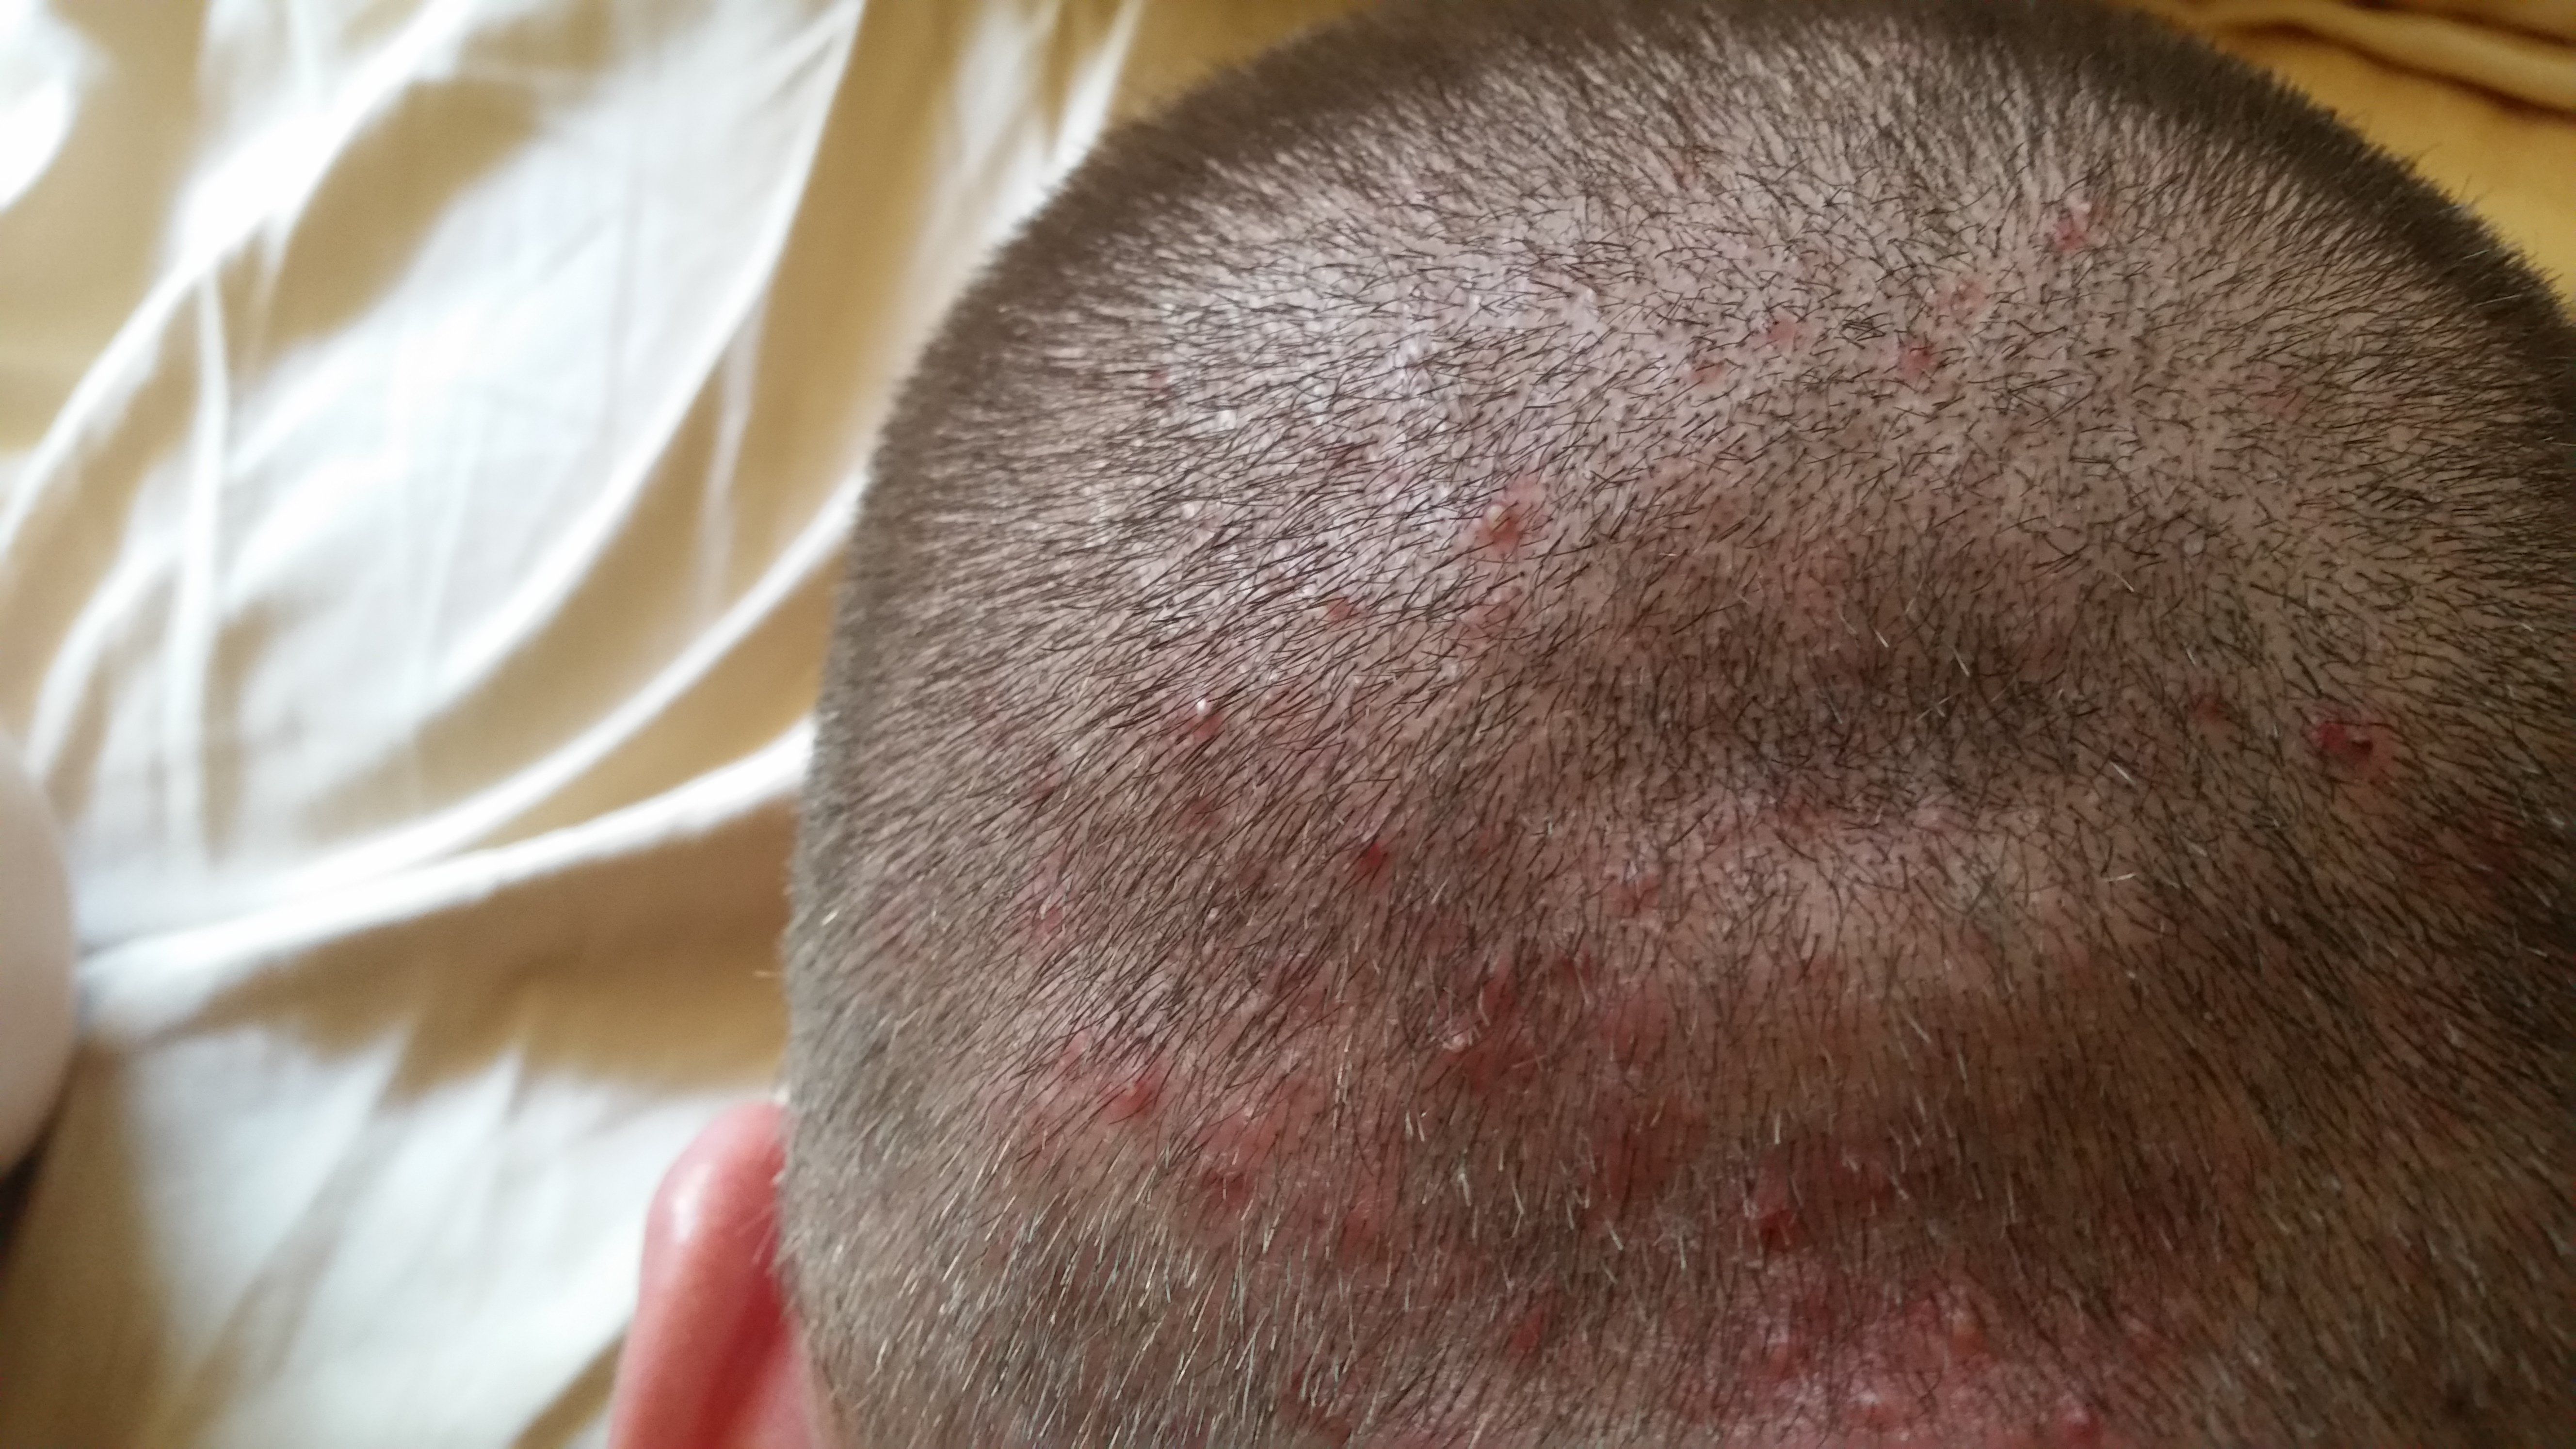 Shaved head cures folliculitis